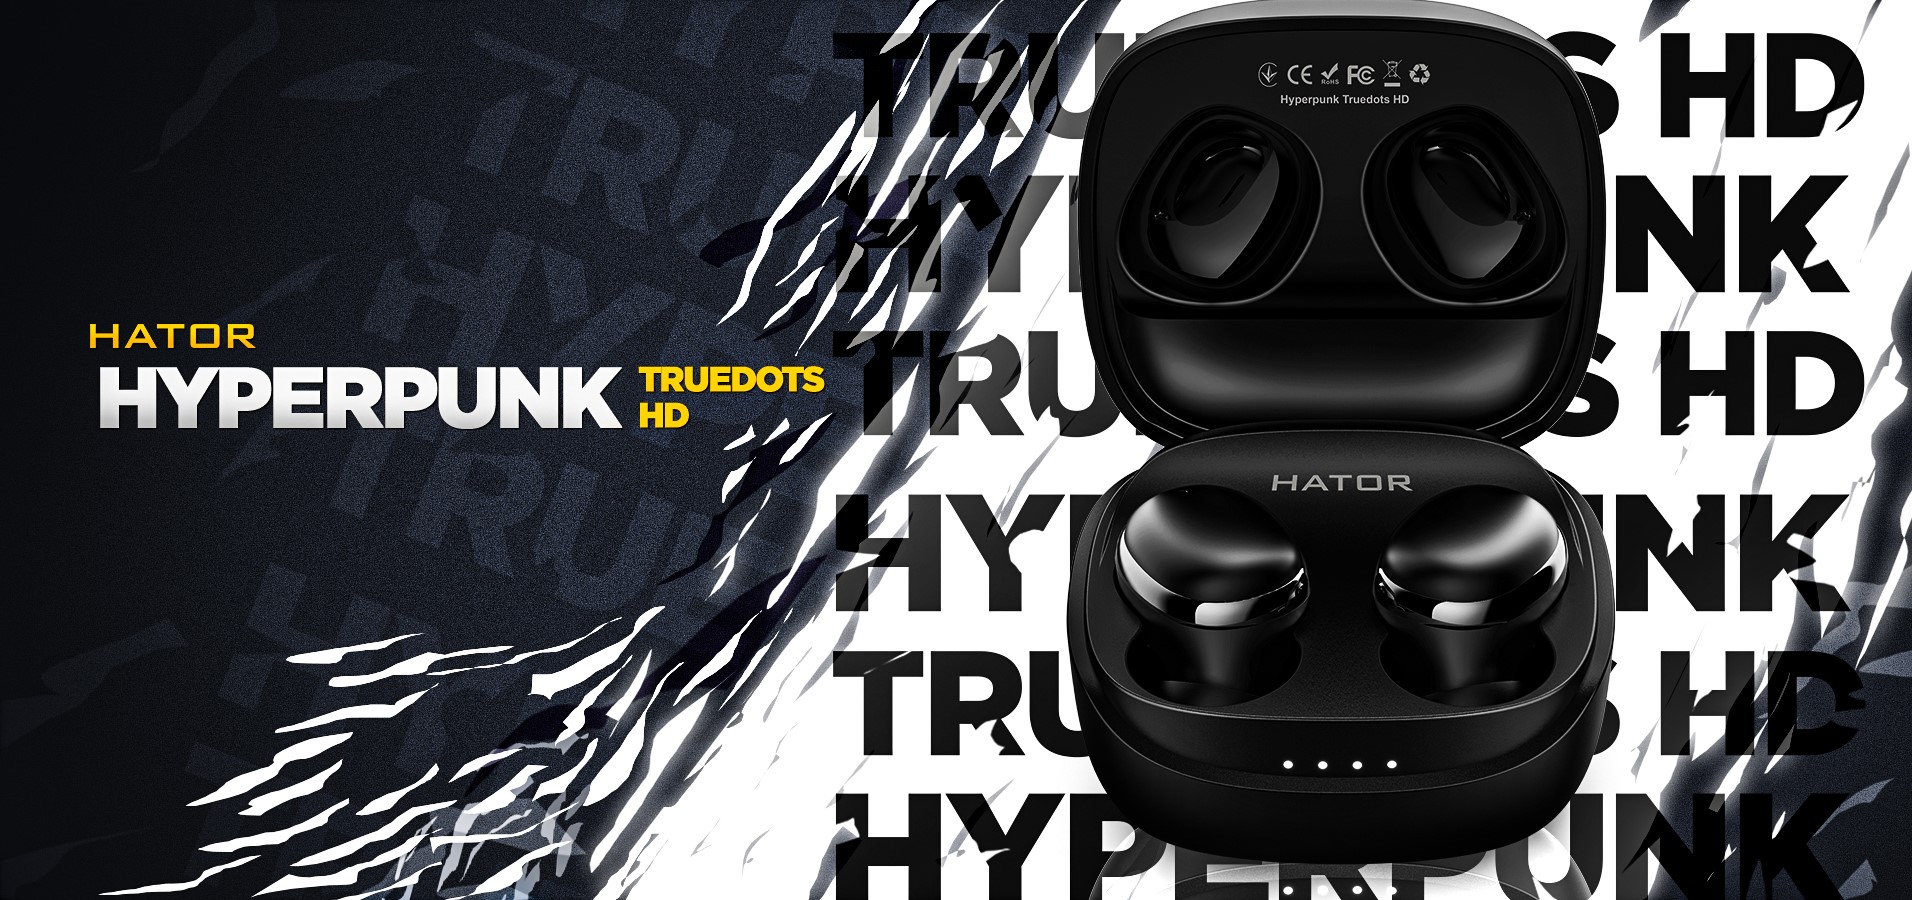 Hator-Hyperpunk-Truedots-HD-Black-HTA-411-1